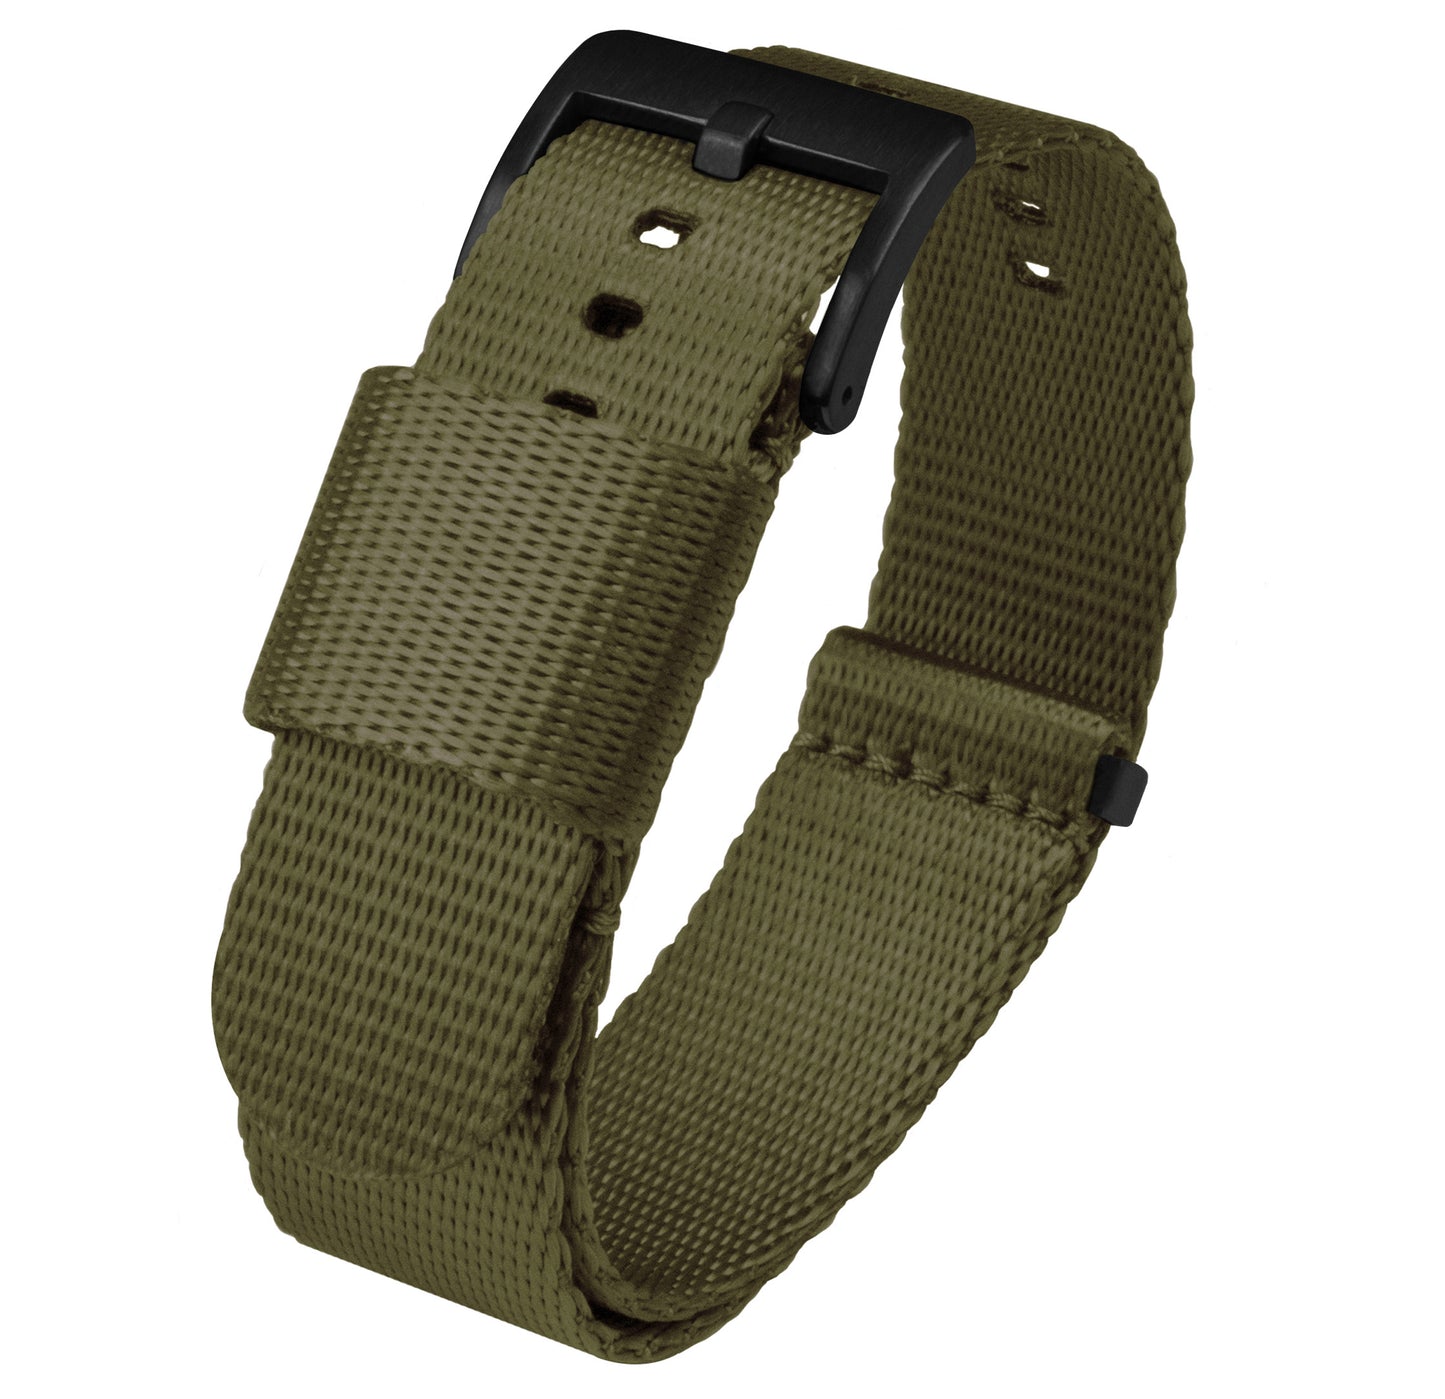 Army Green | Elite Nylon NATO Style - Barton Watch Bands